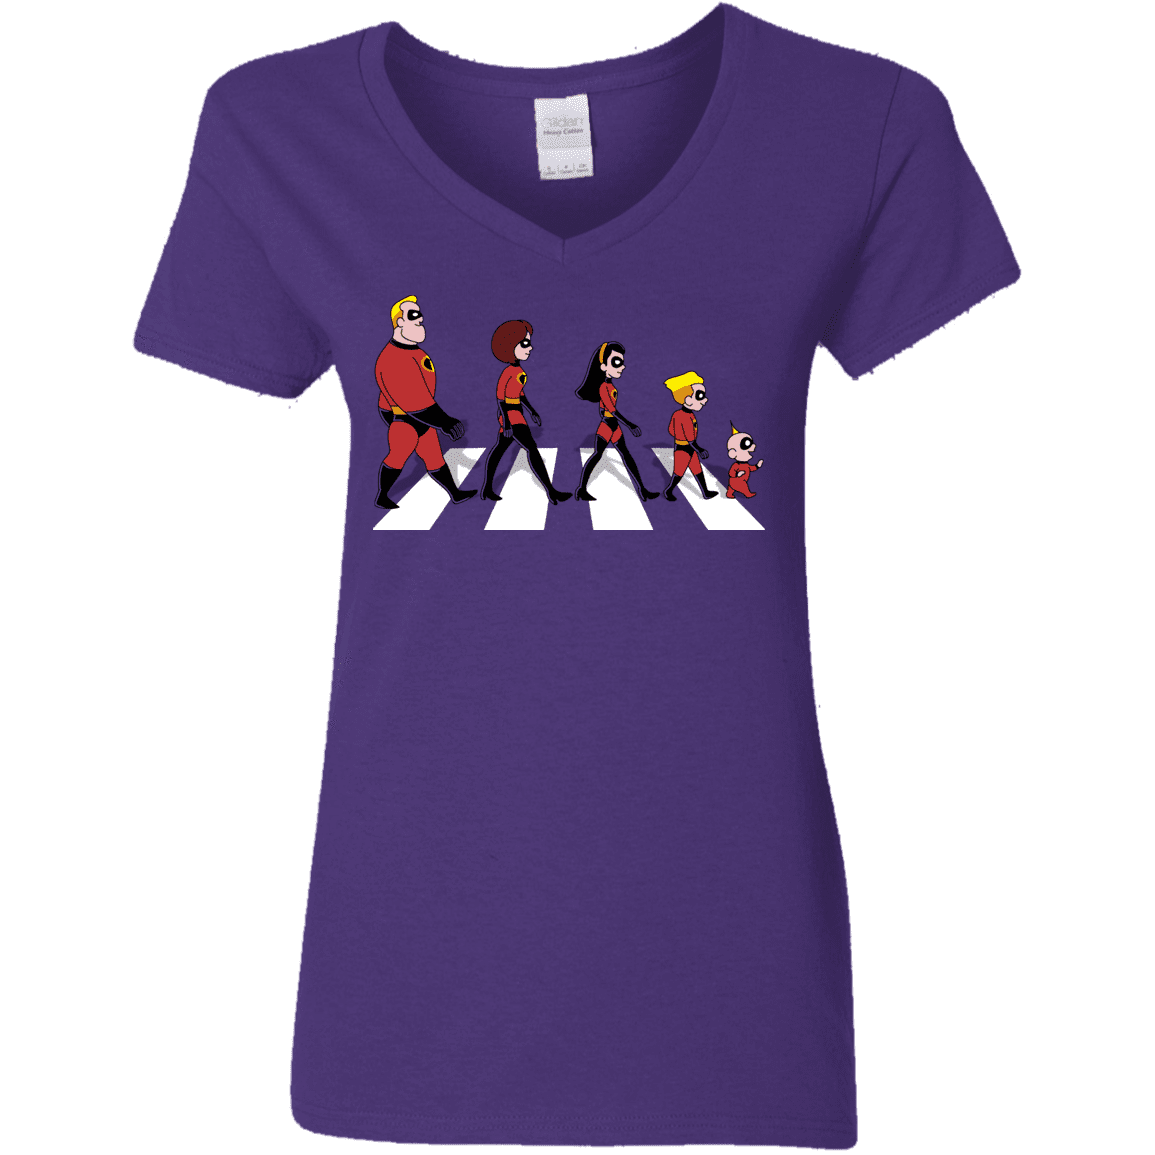 T-Shirts Purple / S The Supers Women's V-Neck T-Shirt